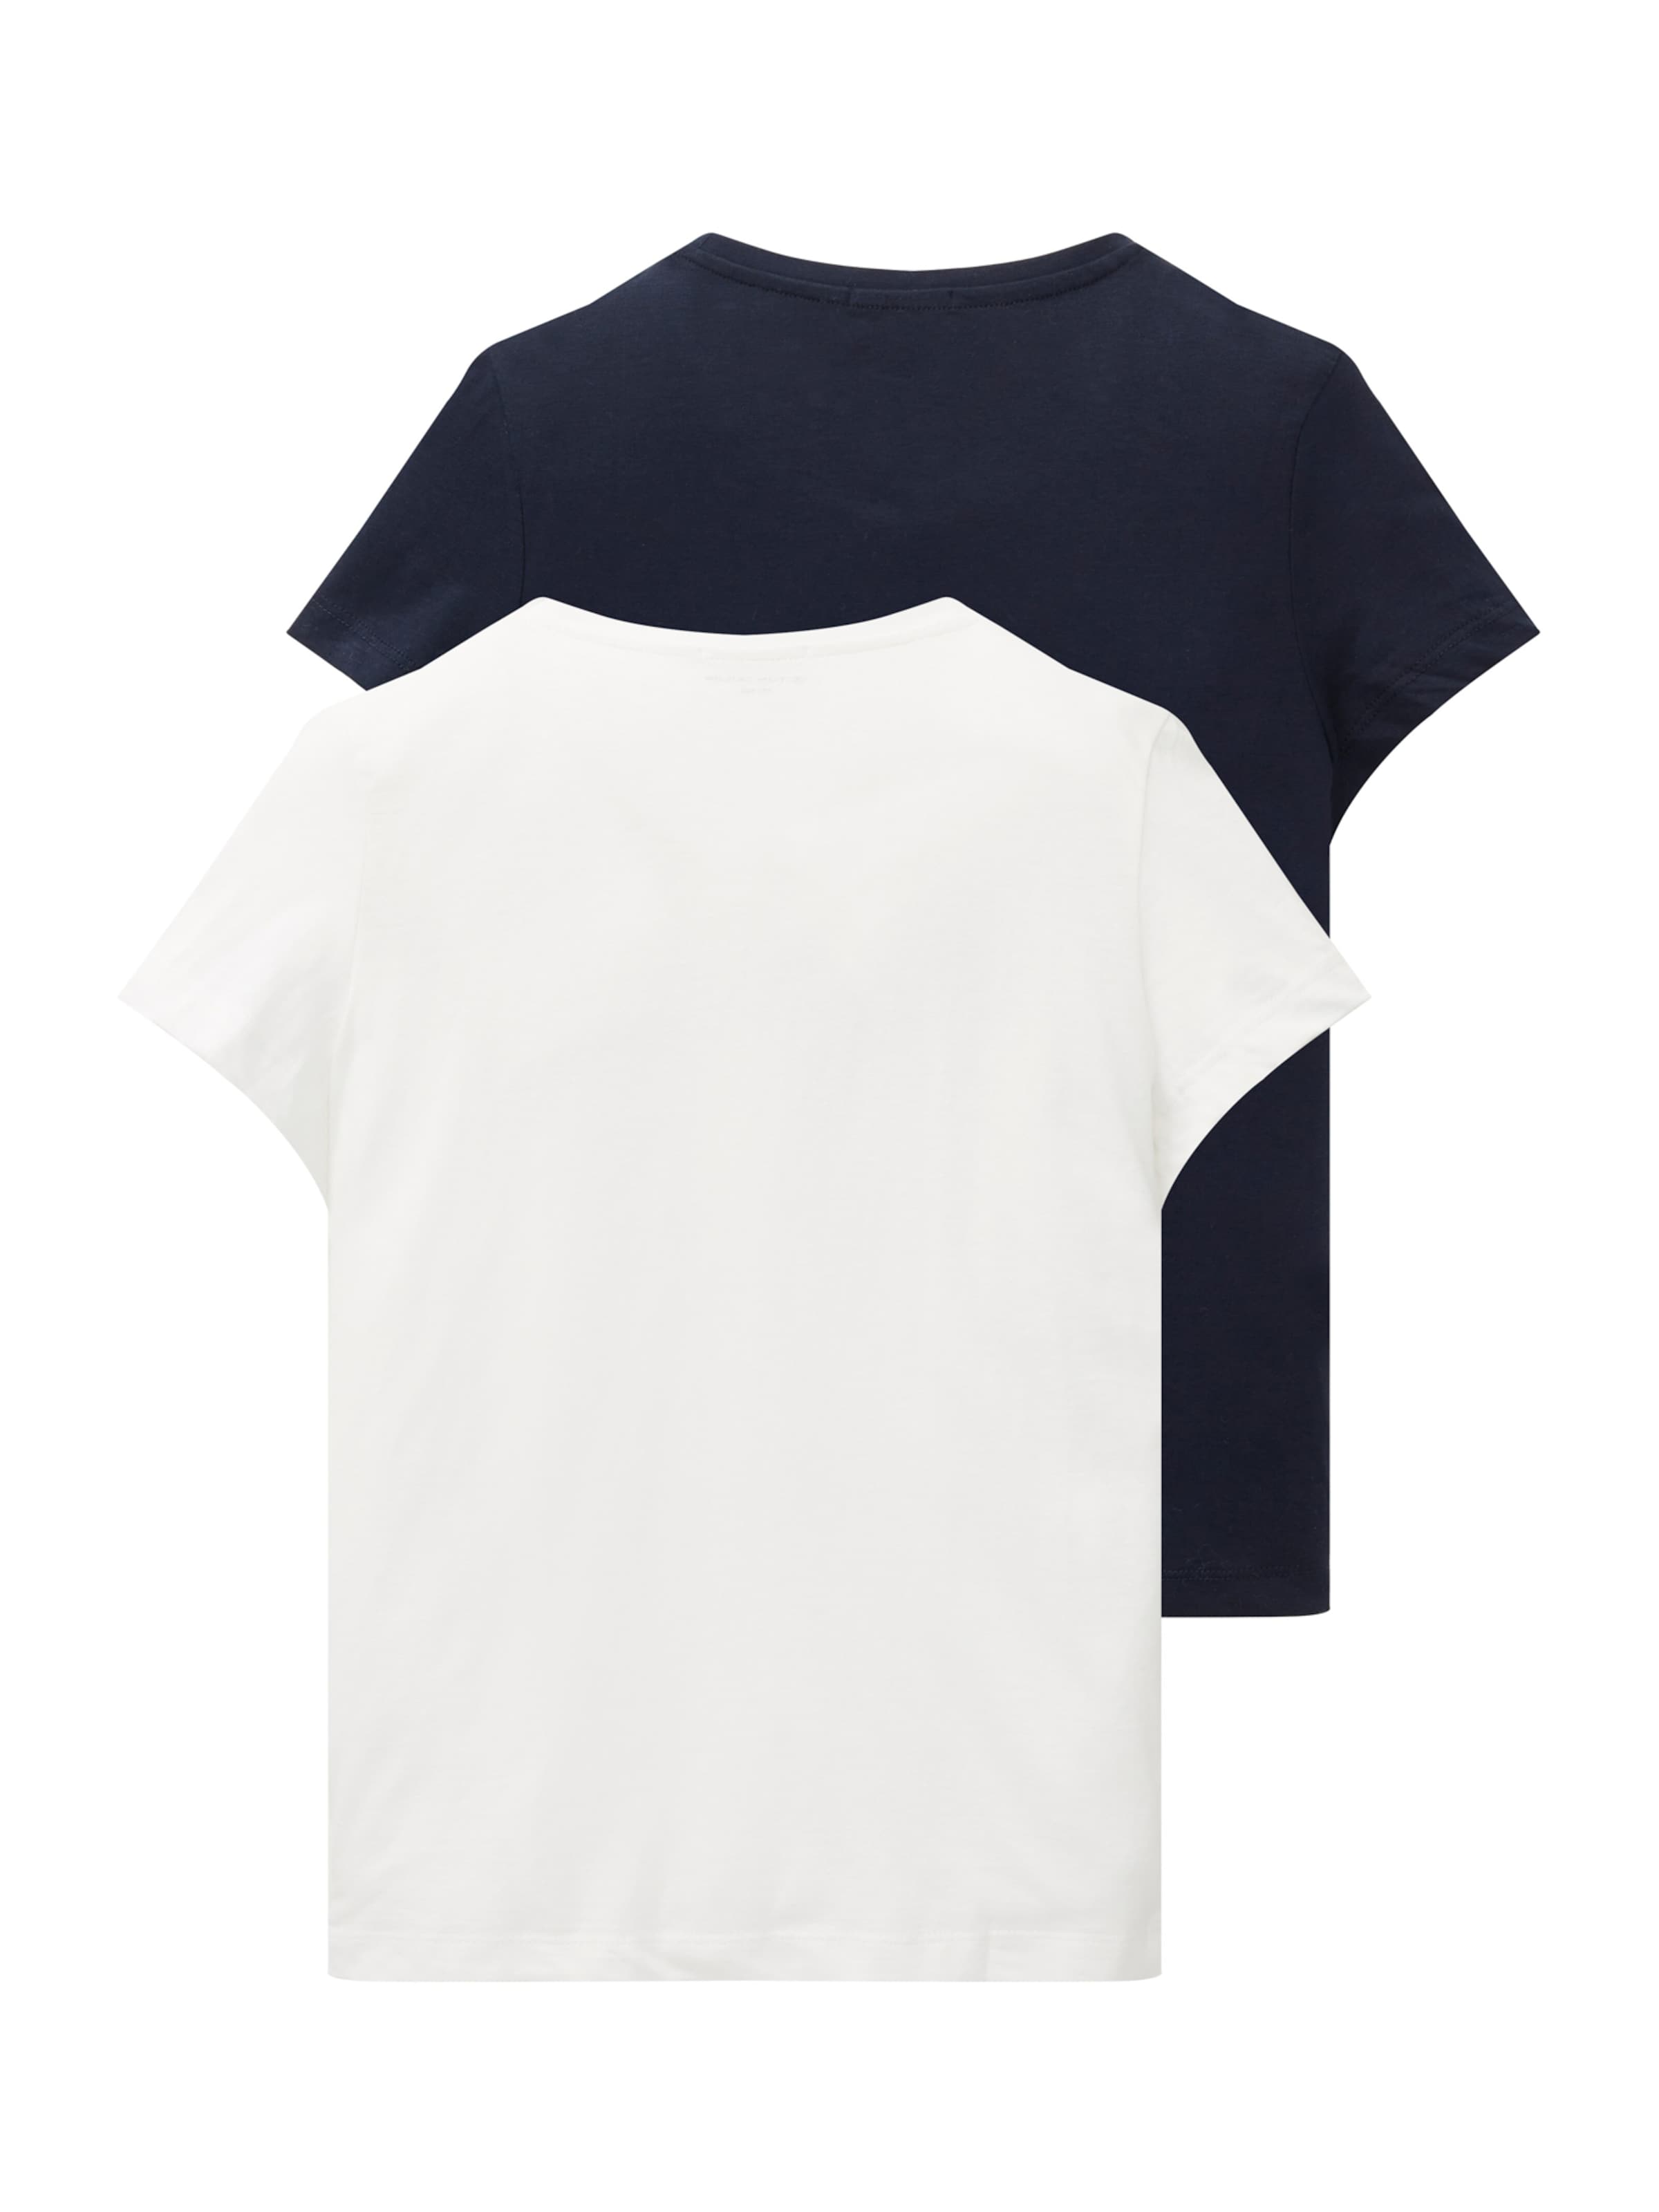 Kinder Teens (Gr. 140-176) TOM TAILOR T-Shirt in Nachtblau, Weiß - EP11399